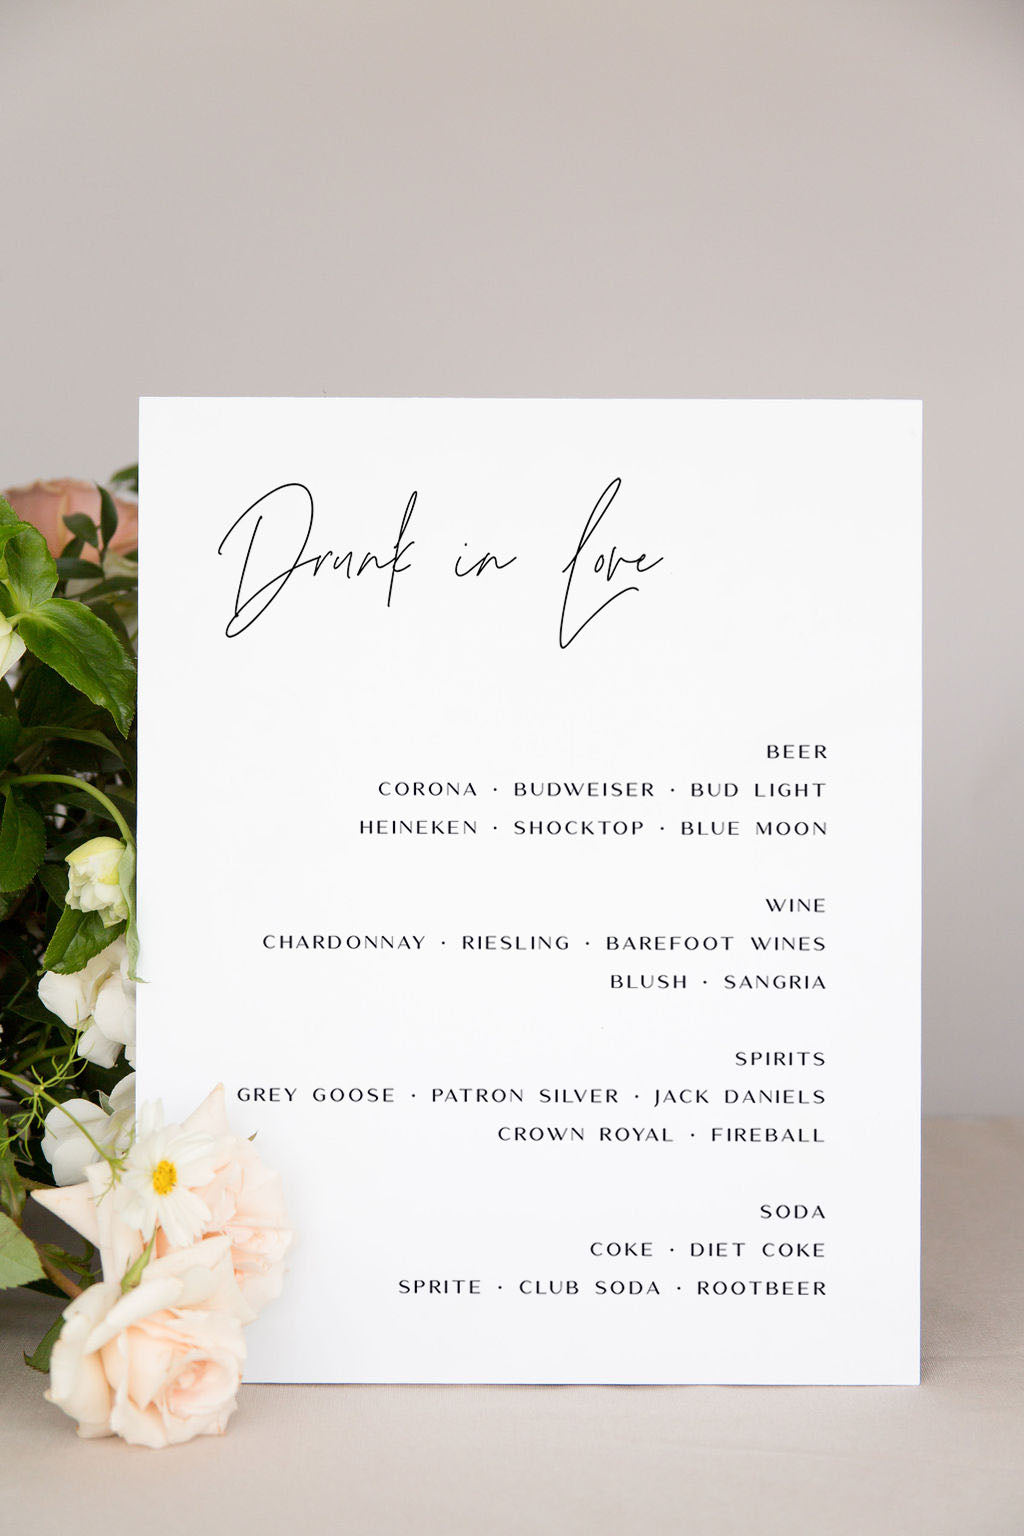 Acrylic Signature Drink Sign Wedding | The Alicia